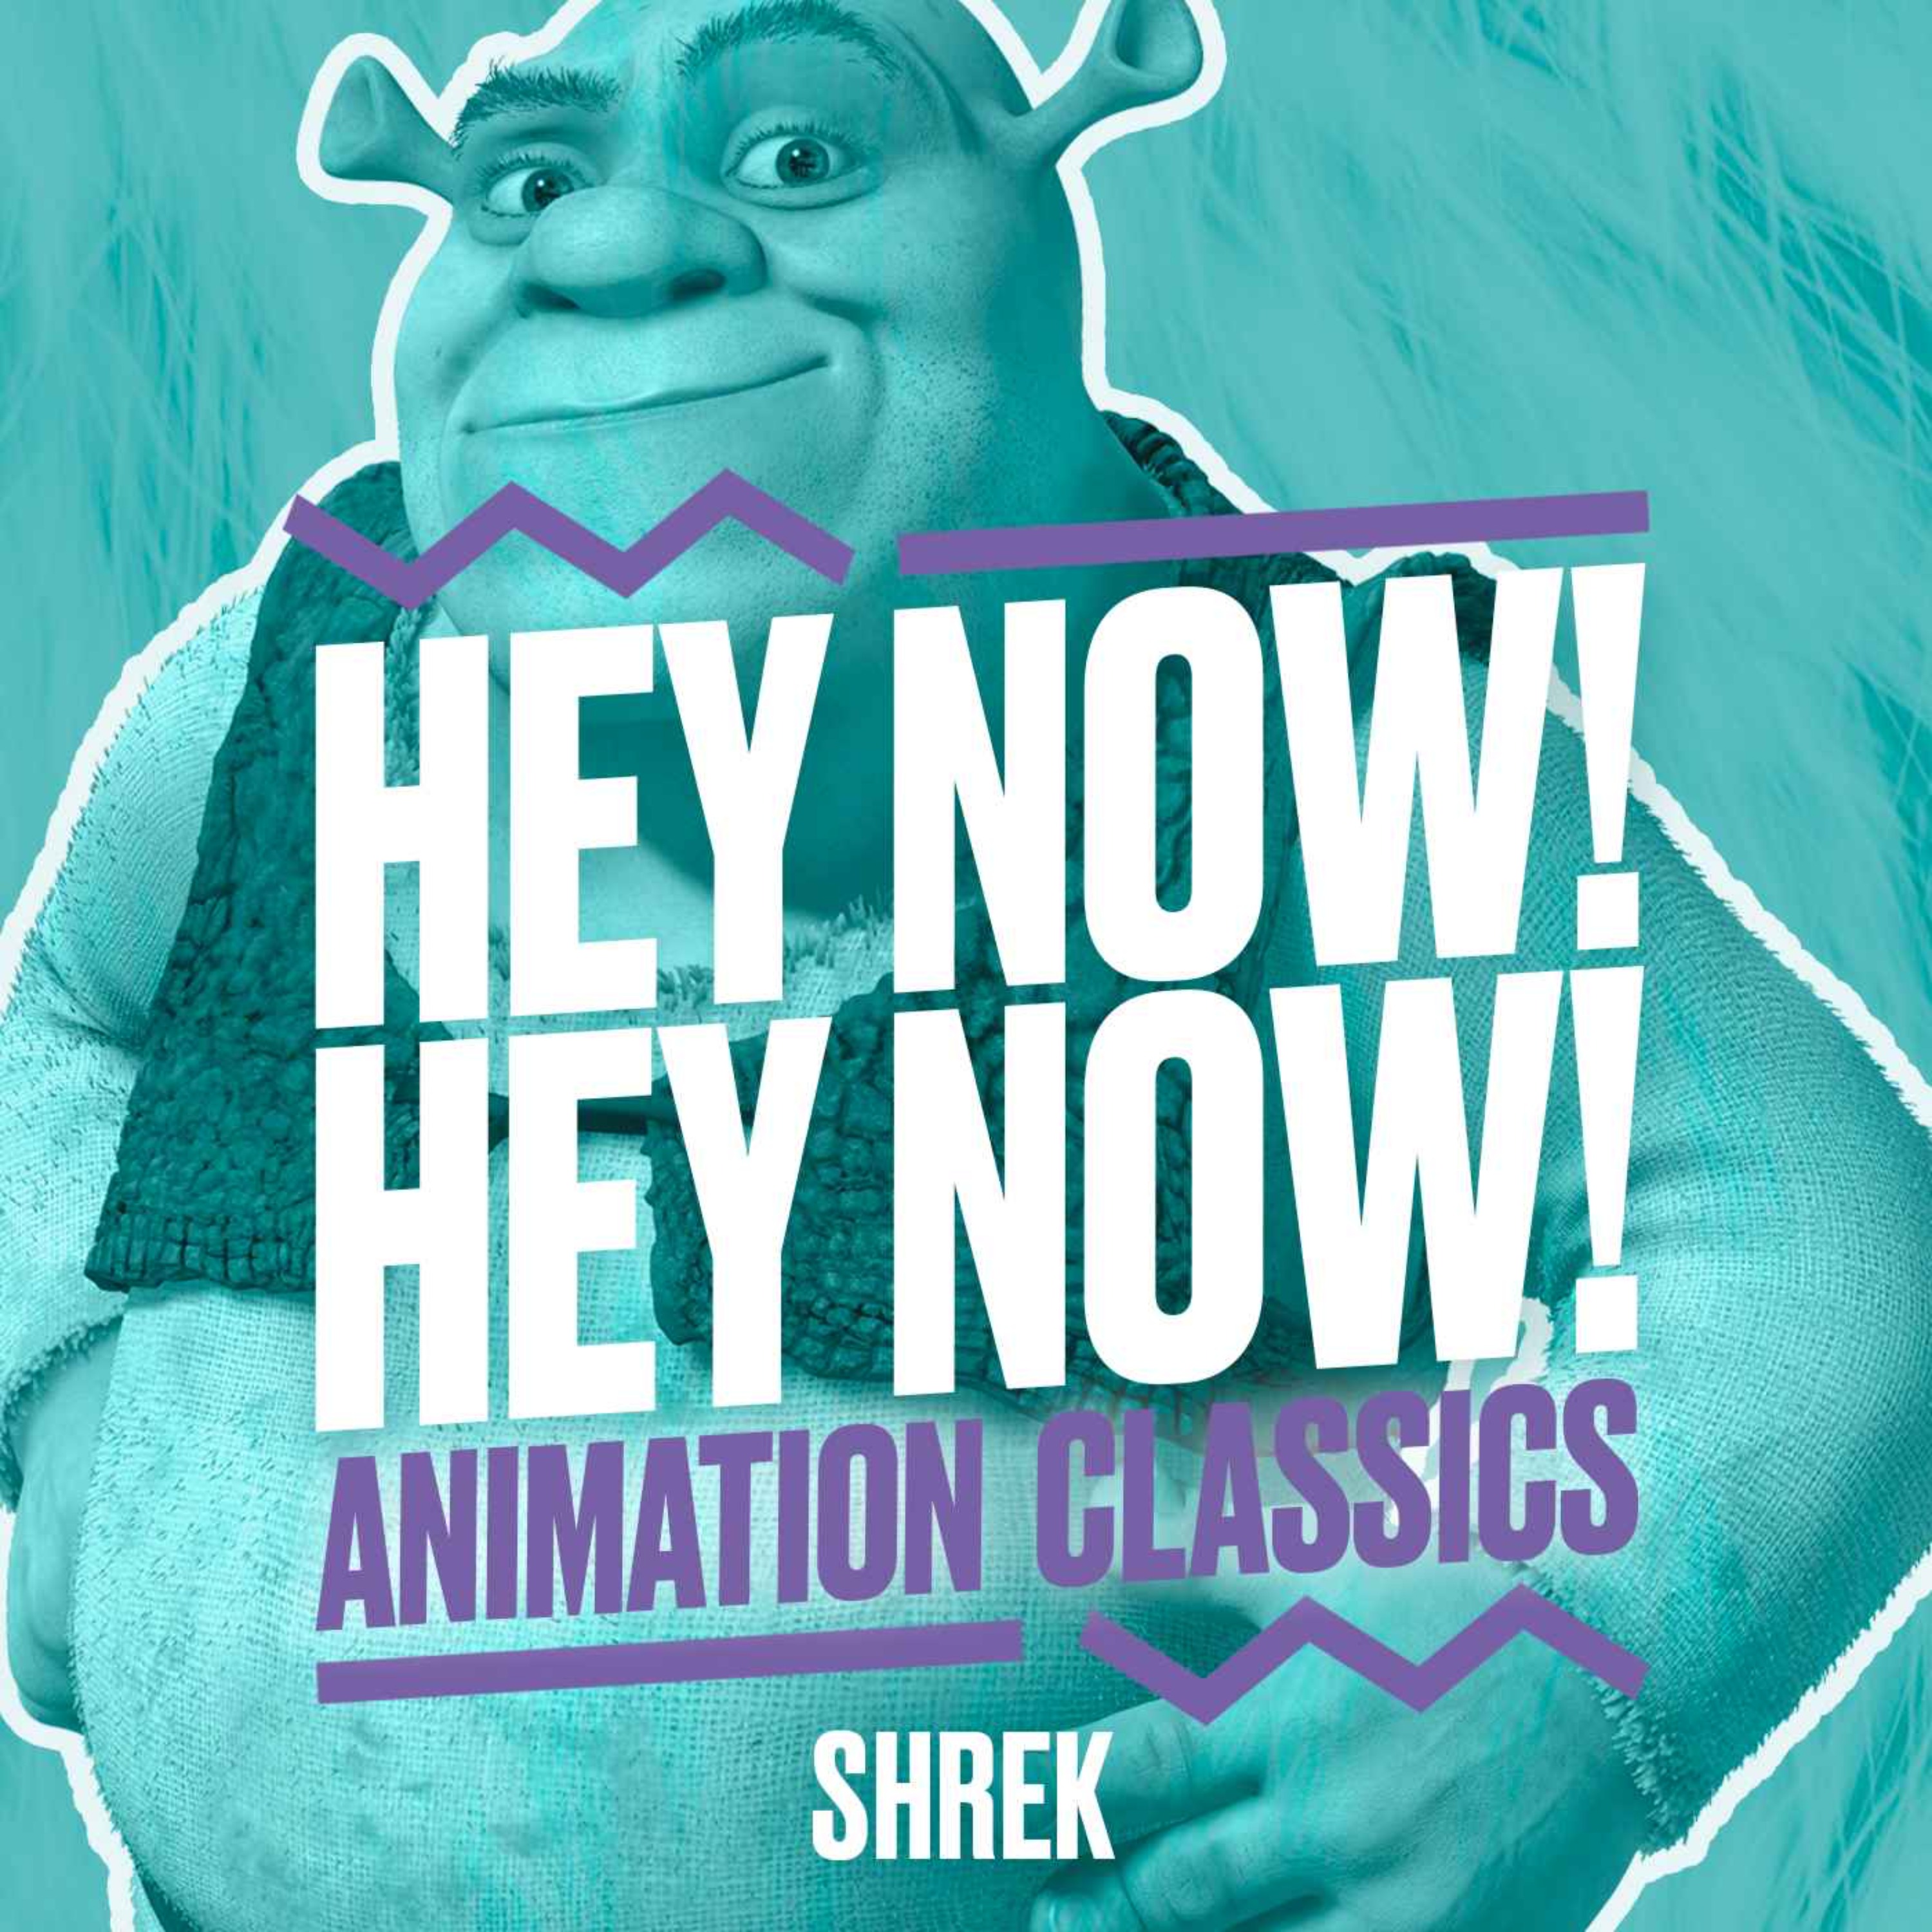 Animation Classics: Shrek